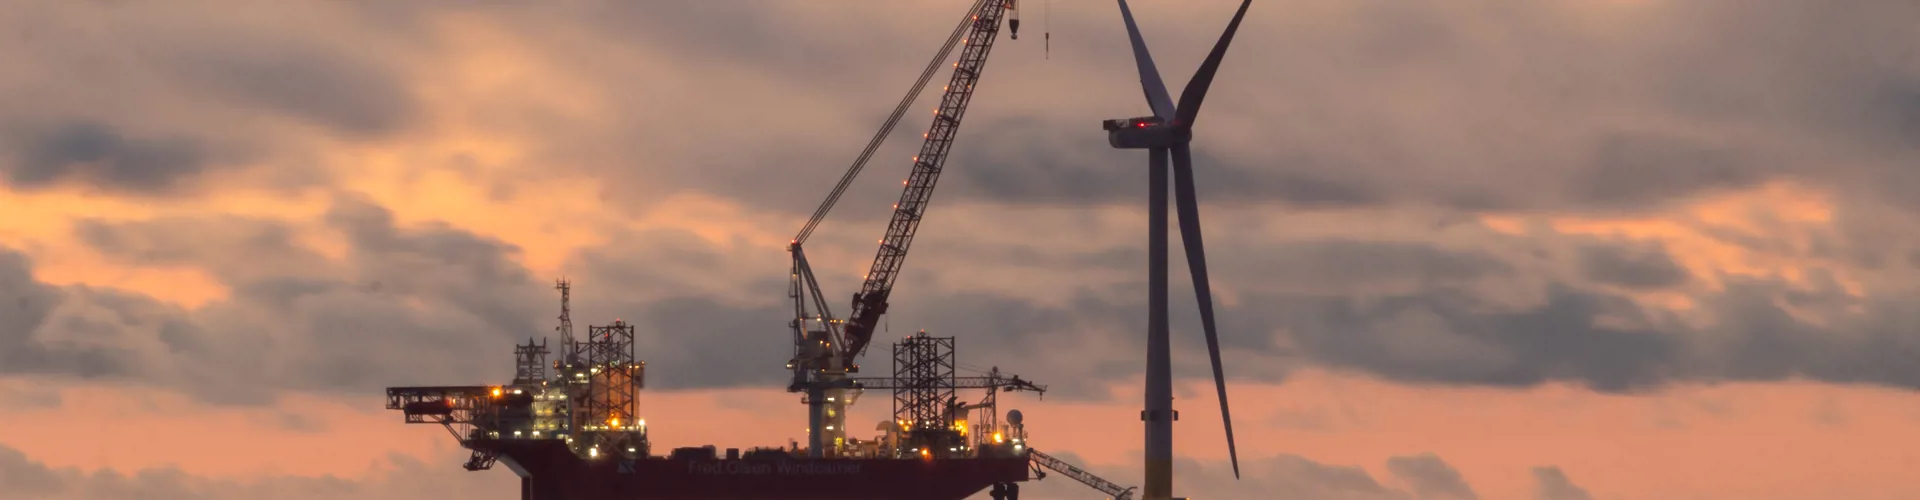 wind turbine instillation undertaking maintenance at an offshore wind farm location